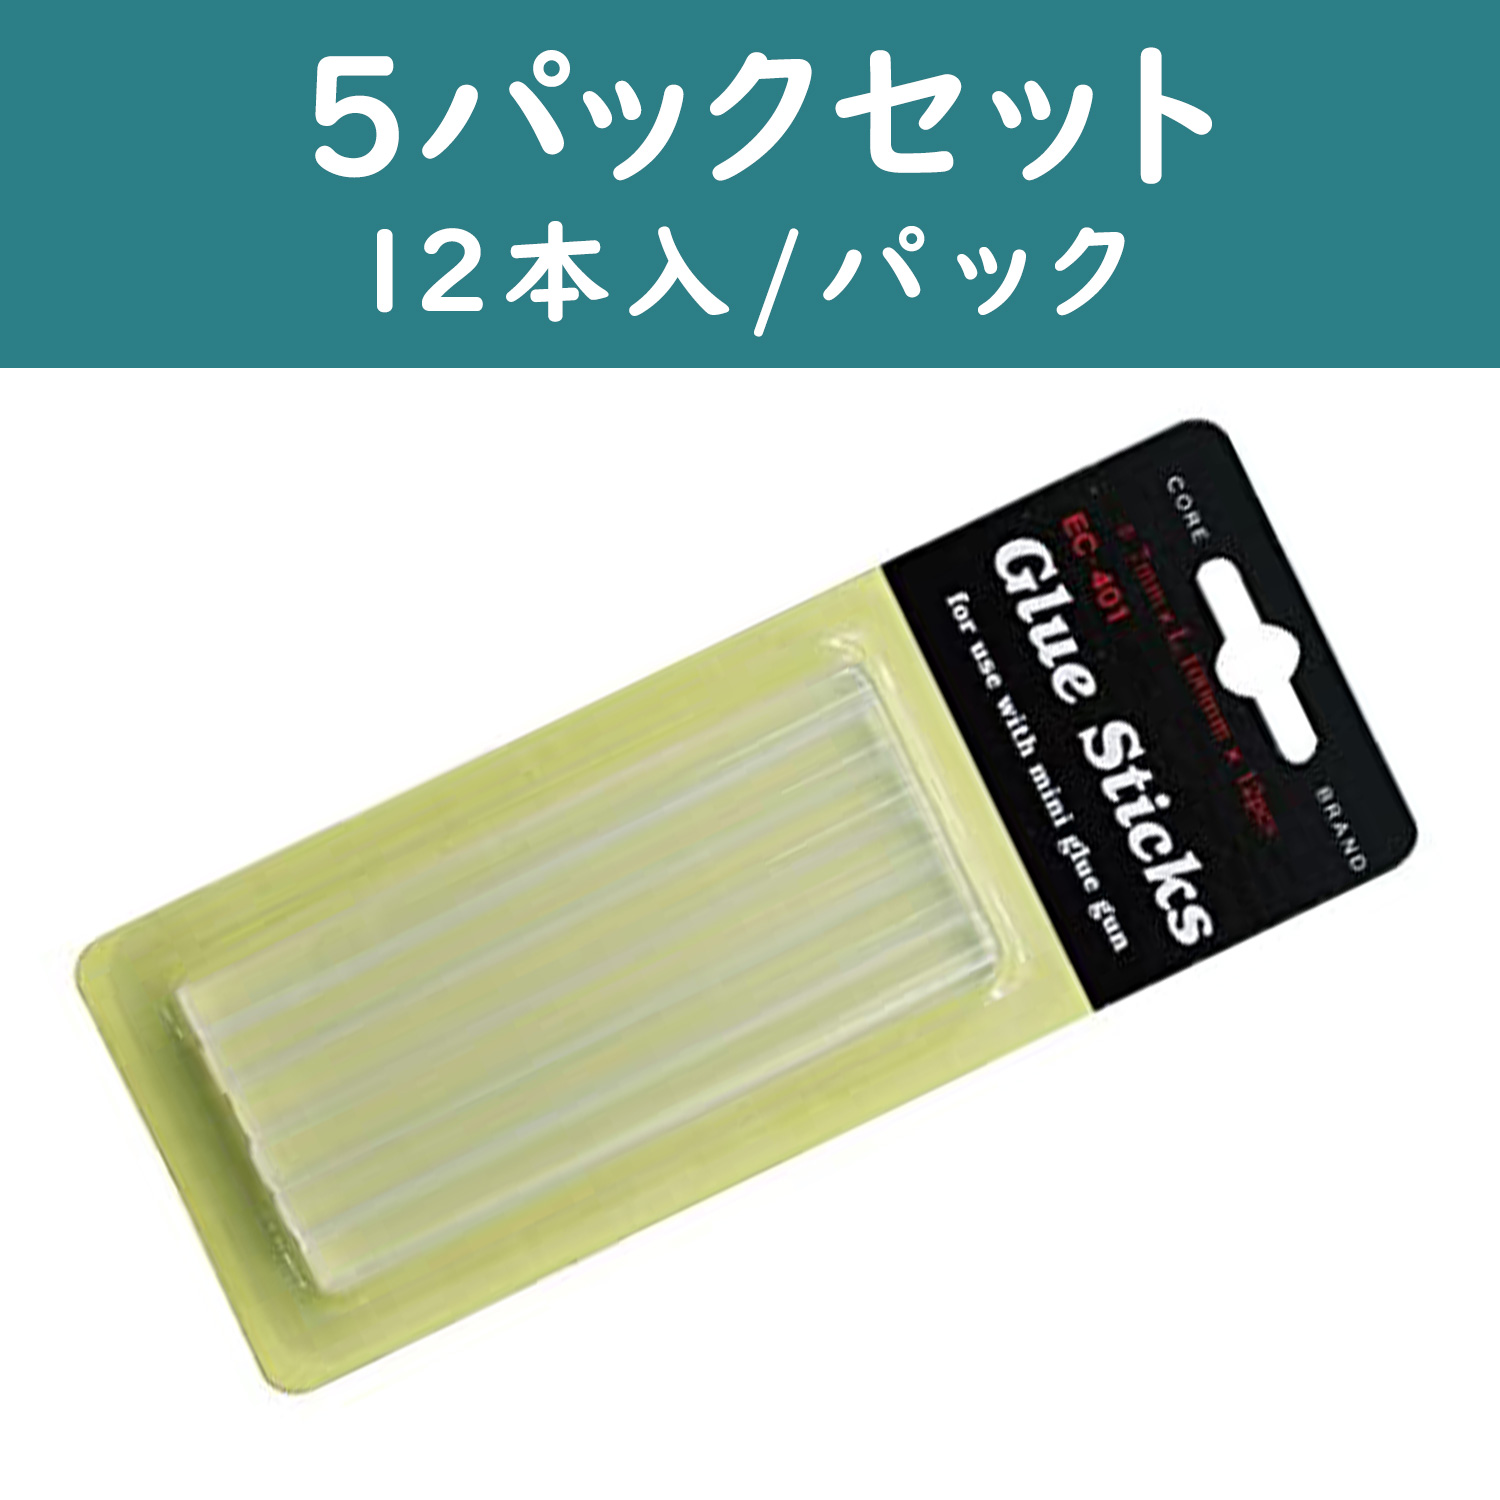 EC401-5  Special) Value Pack Glue Sticks 12pcs x 5 packs (set)